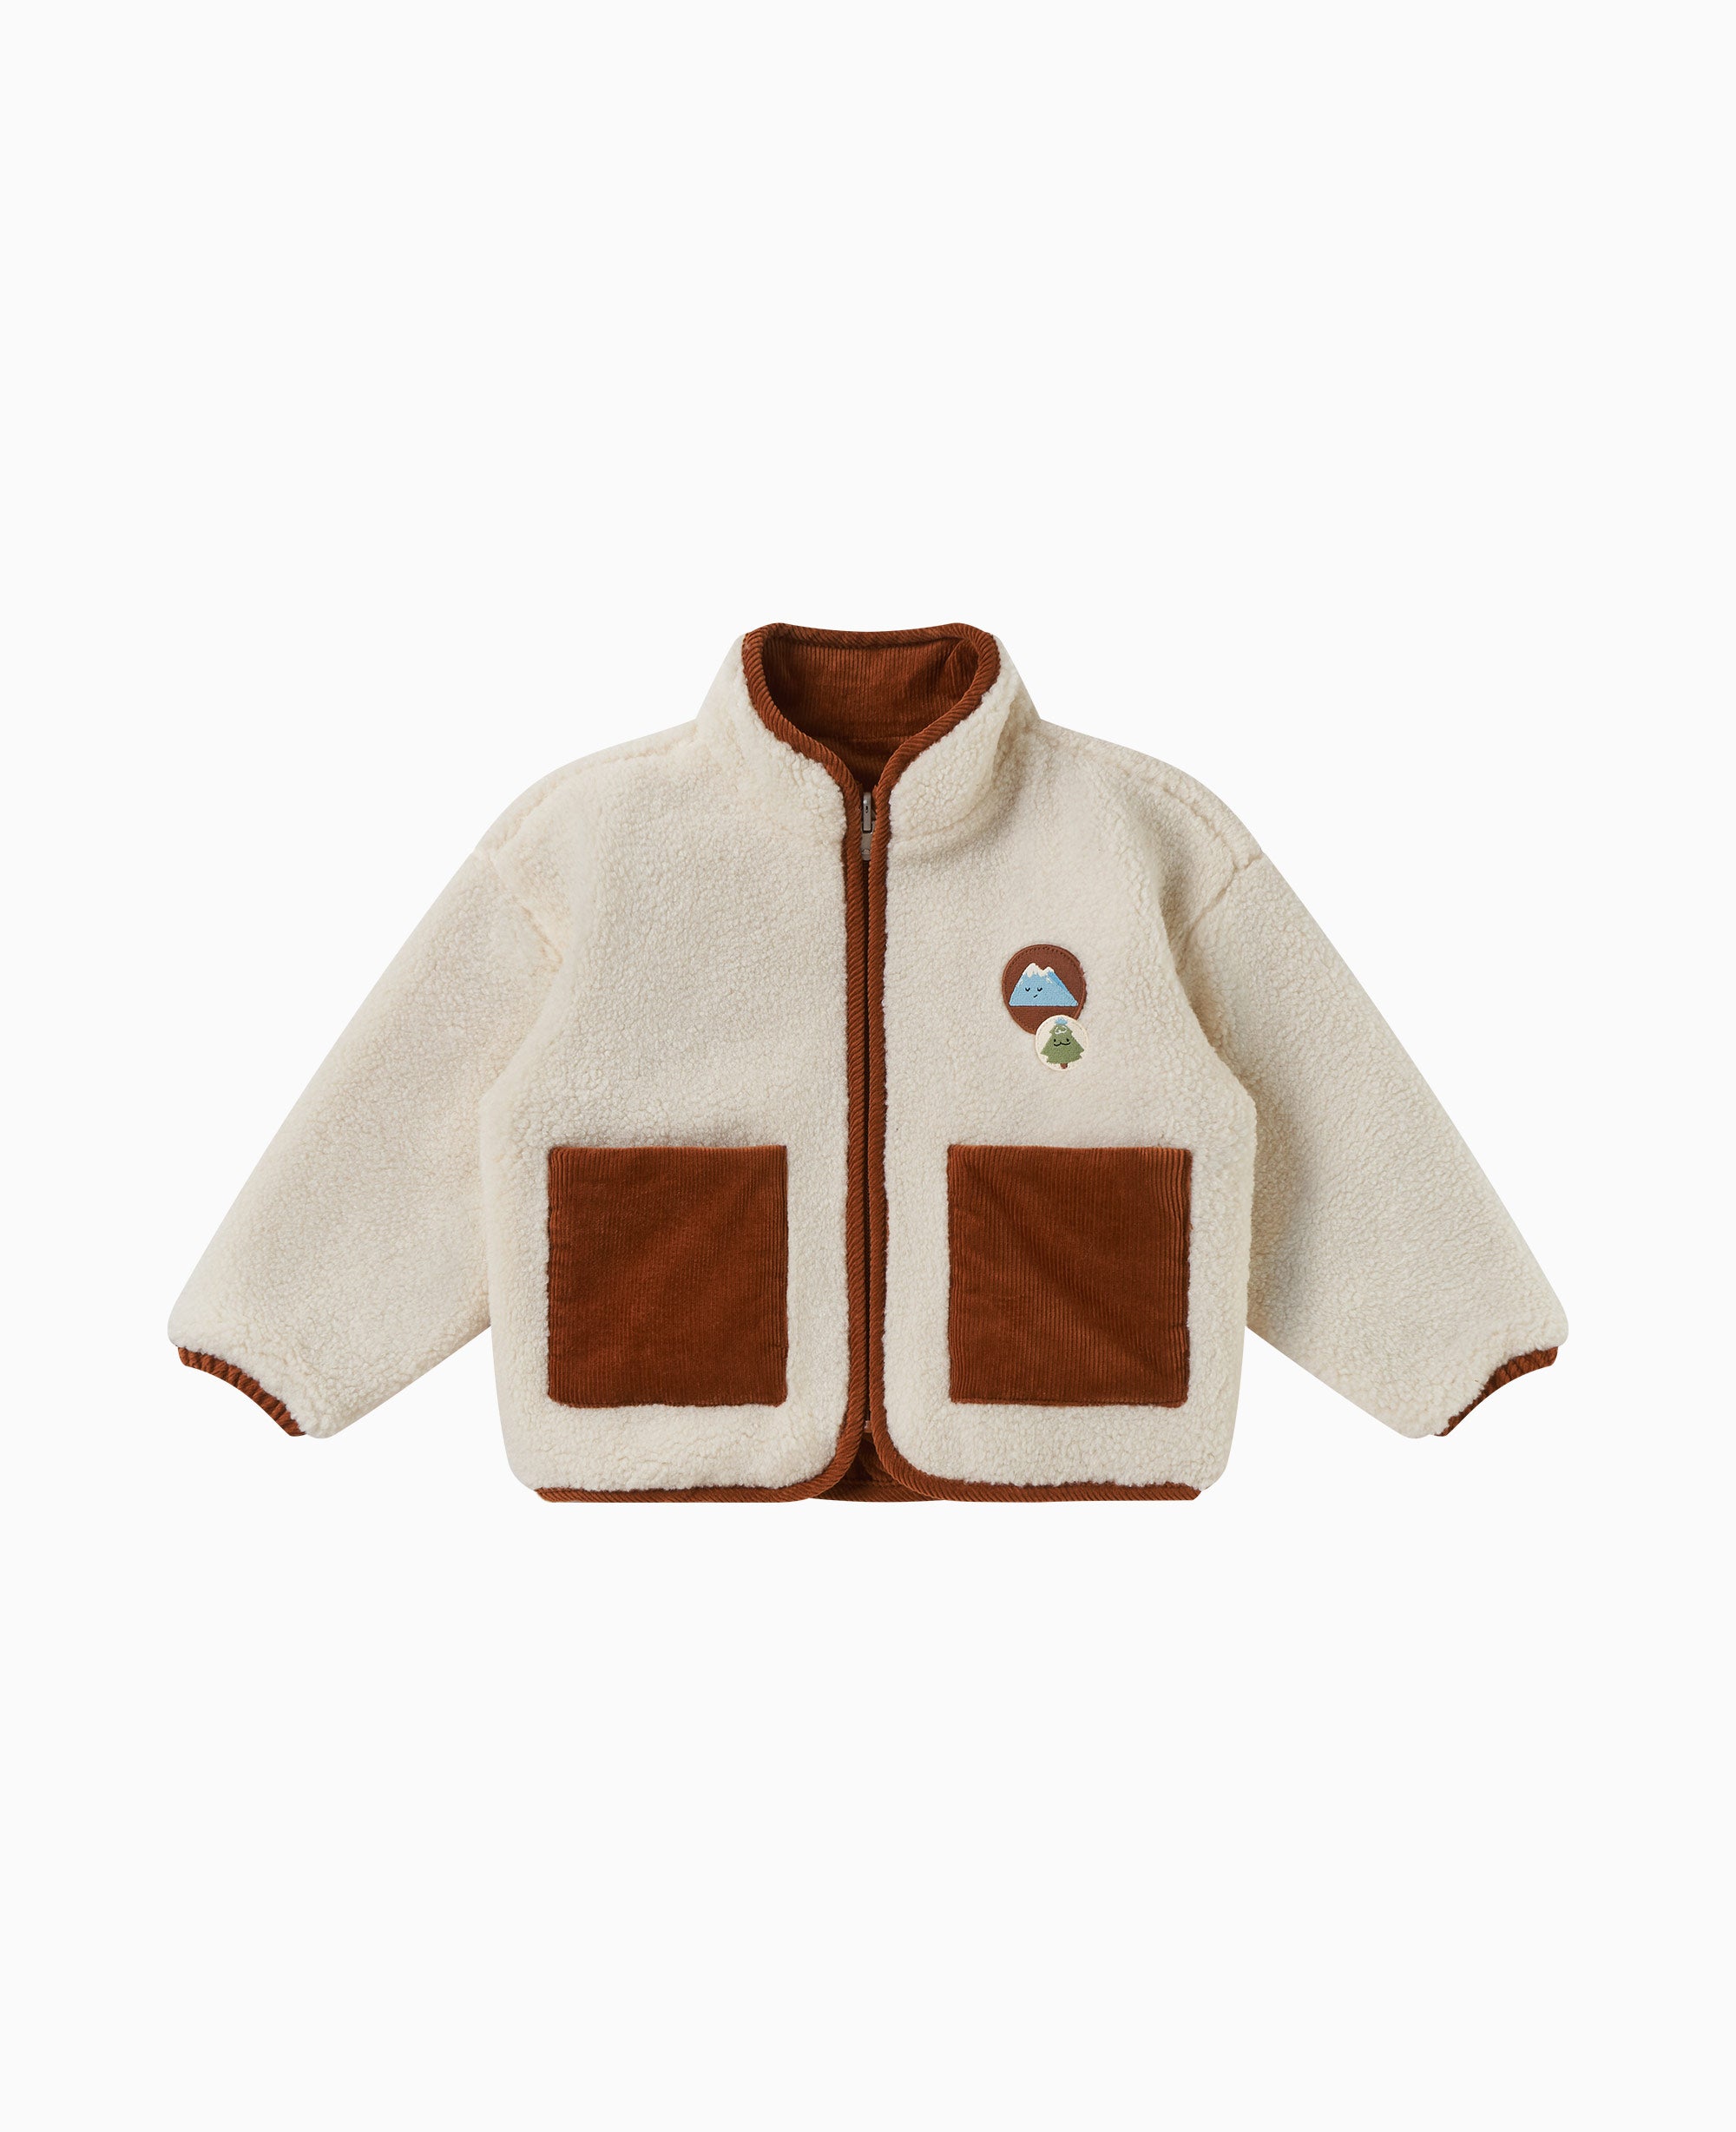 100% Organic Cotton Fleece Zippered Collared Jacket (Plastic-free